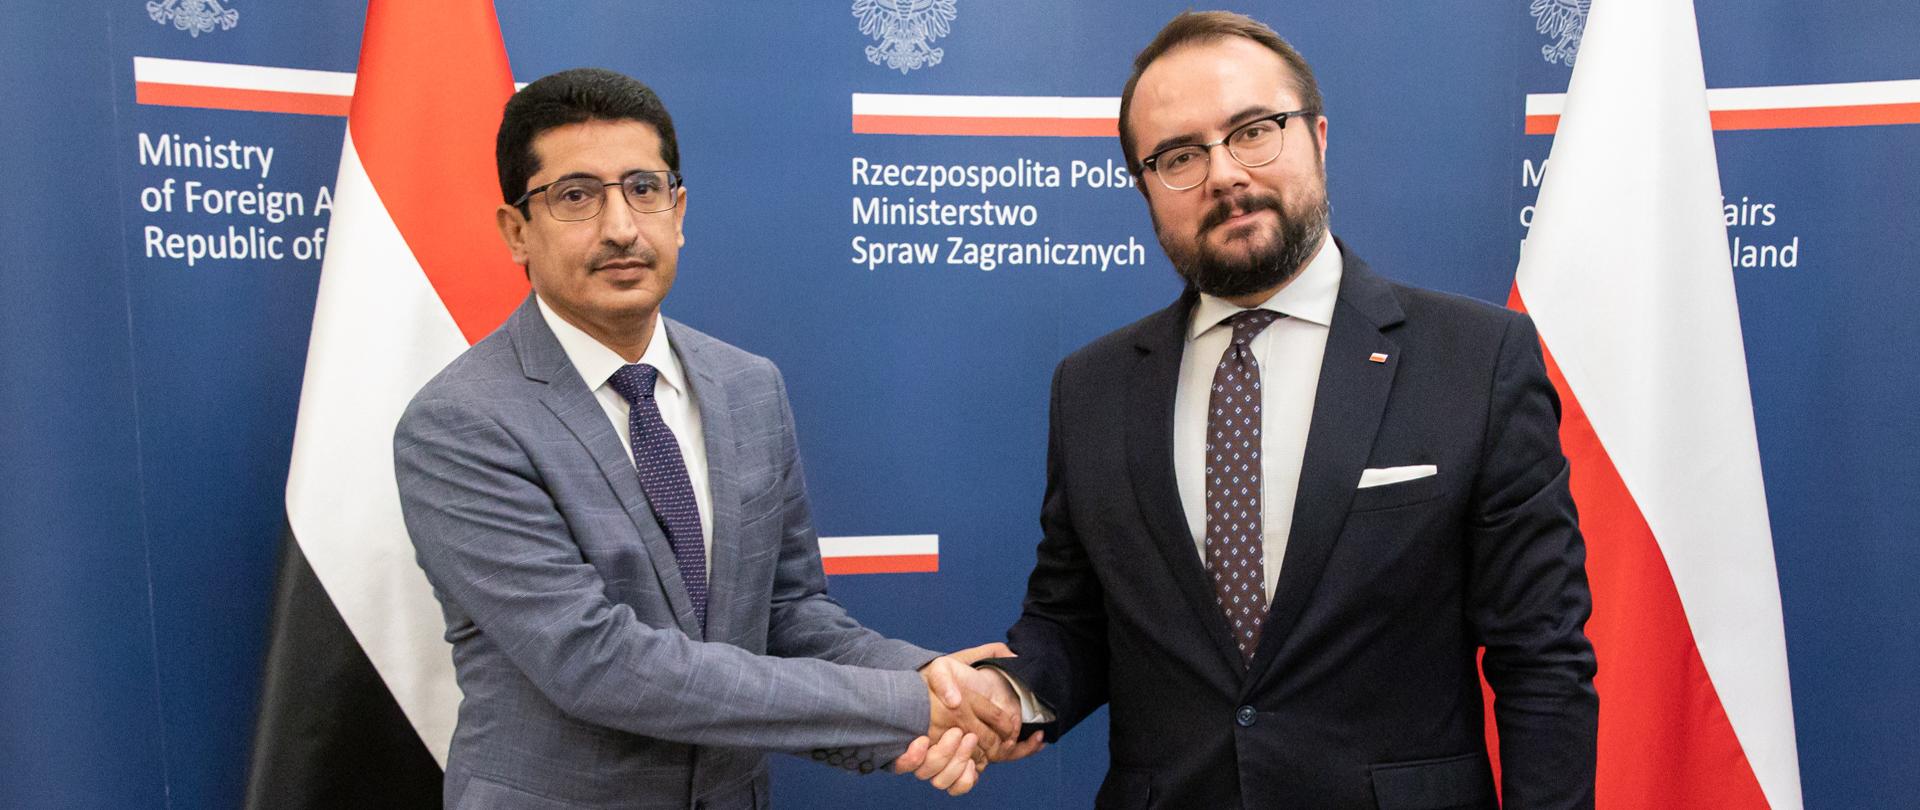 Deputy Minister Paweł Jabłoński welcomed Deputy Minister Mansour Baggash